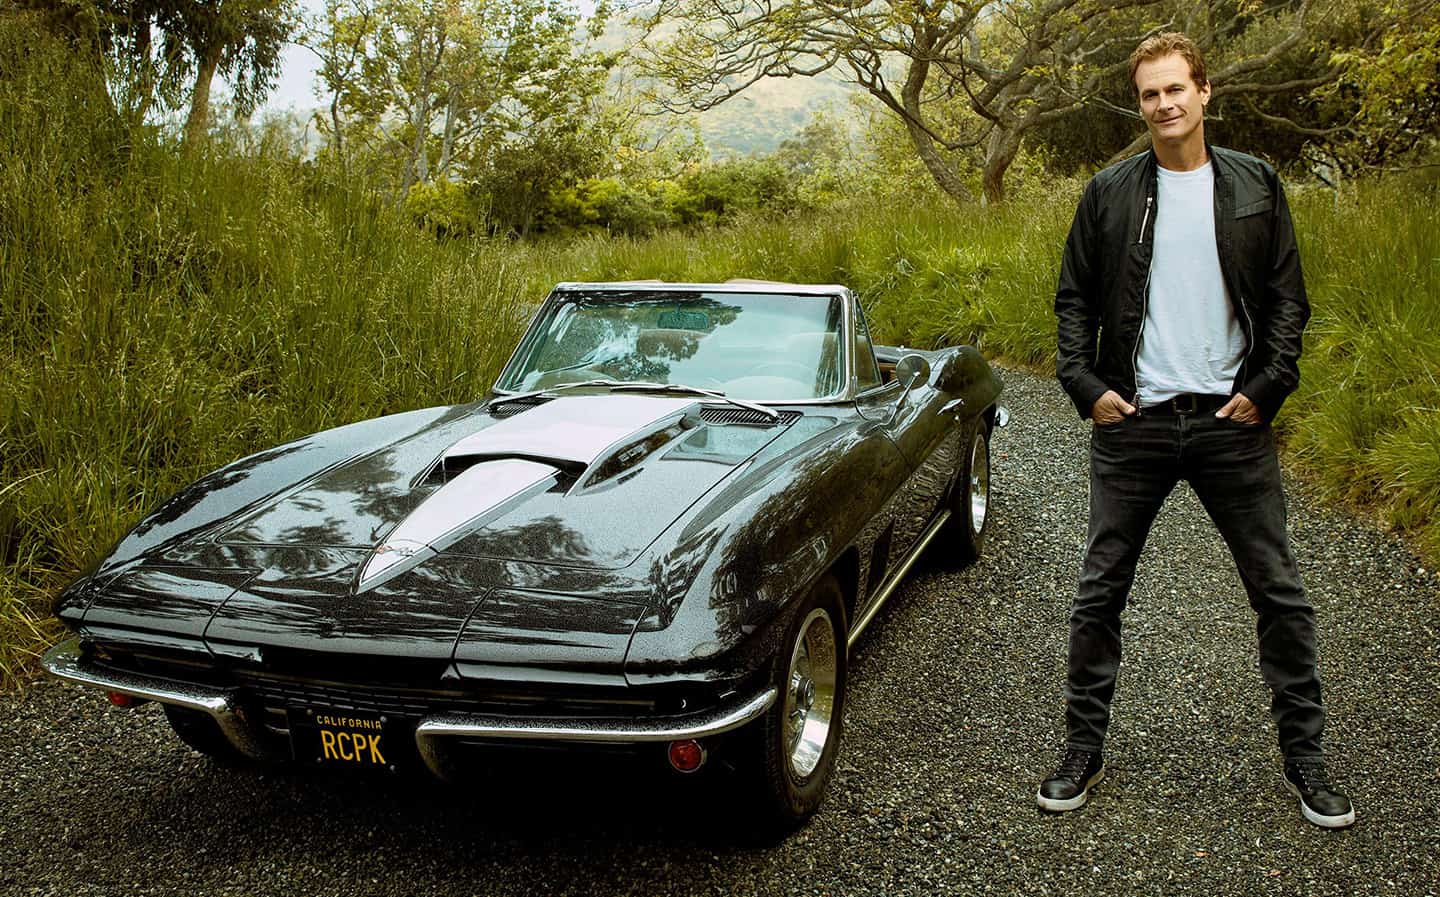 Rande Gerber posing in front of his amazing car.